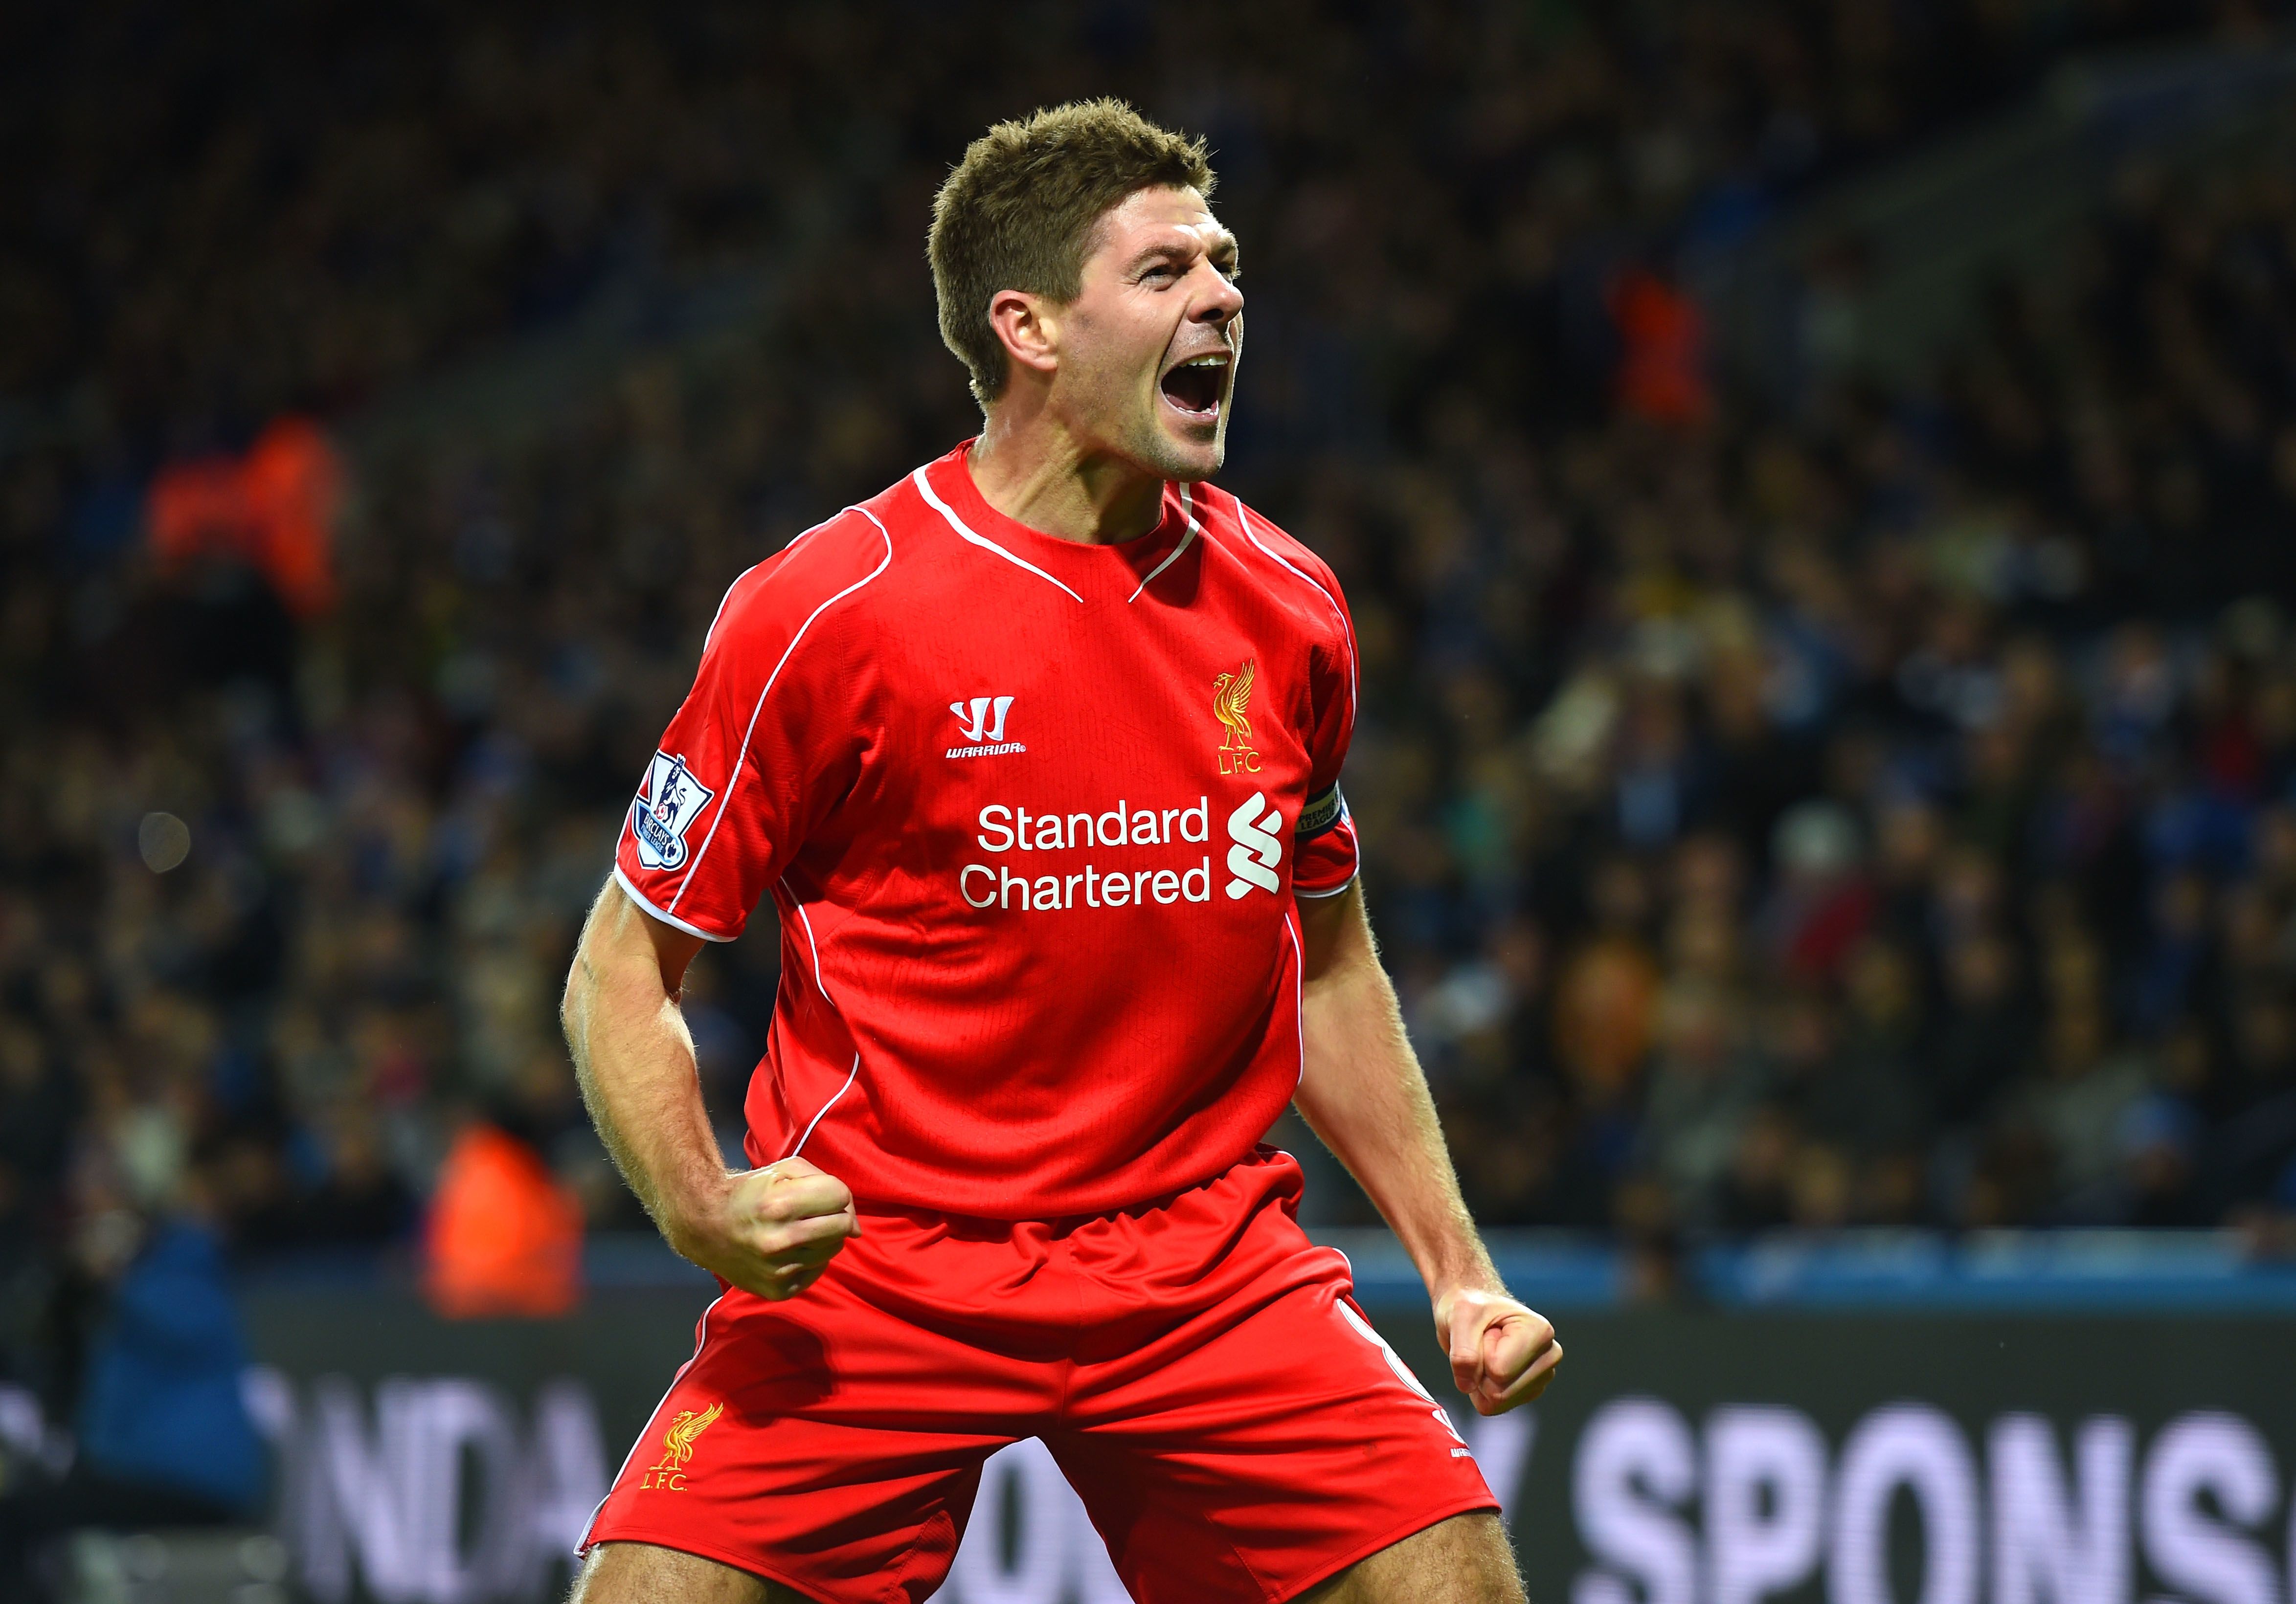 Steven Gerrard to leave Liverpool at end of season | CNN